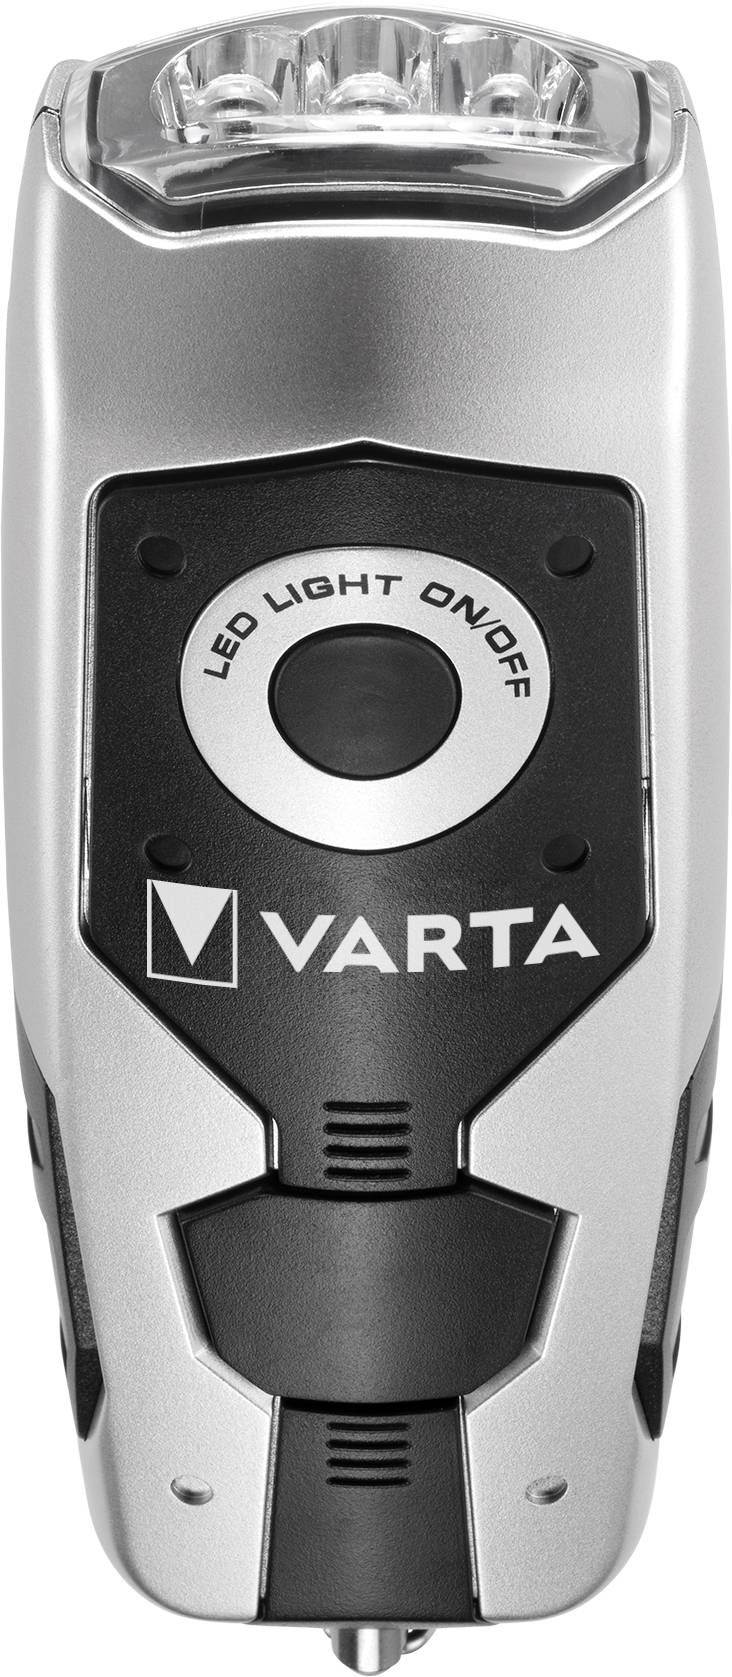 Akku mit Kurbel 17680 Varta Taschenlampe LED Dynamo Light inkl 